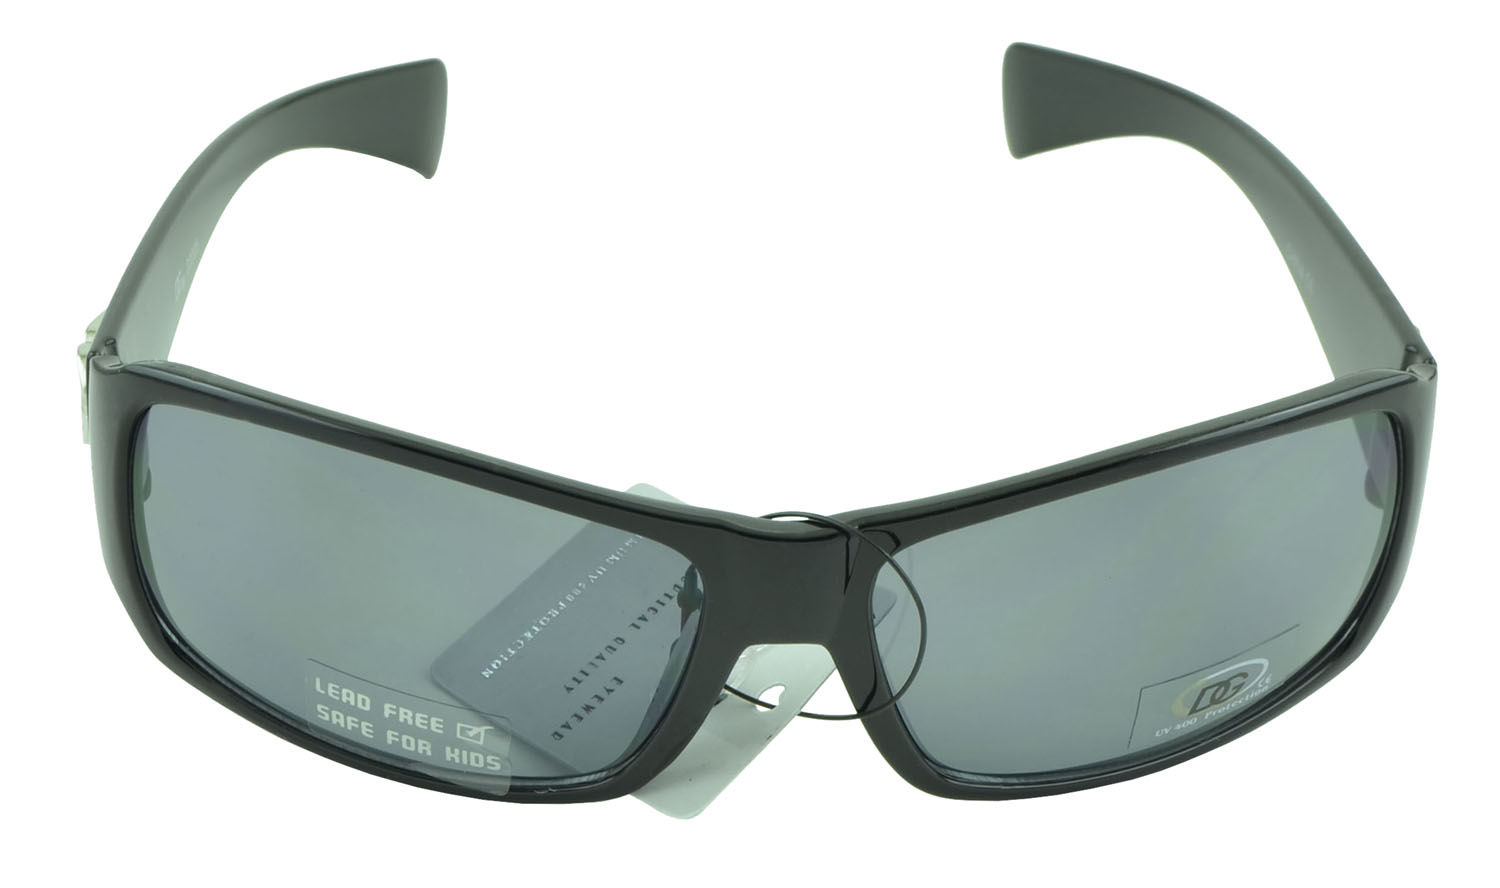 Belle Donne-Kids Sunglasses Fashion Children eyewear 100% UV Protection-Black